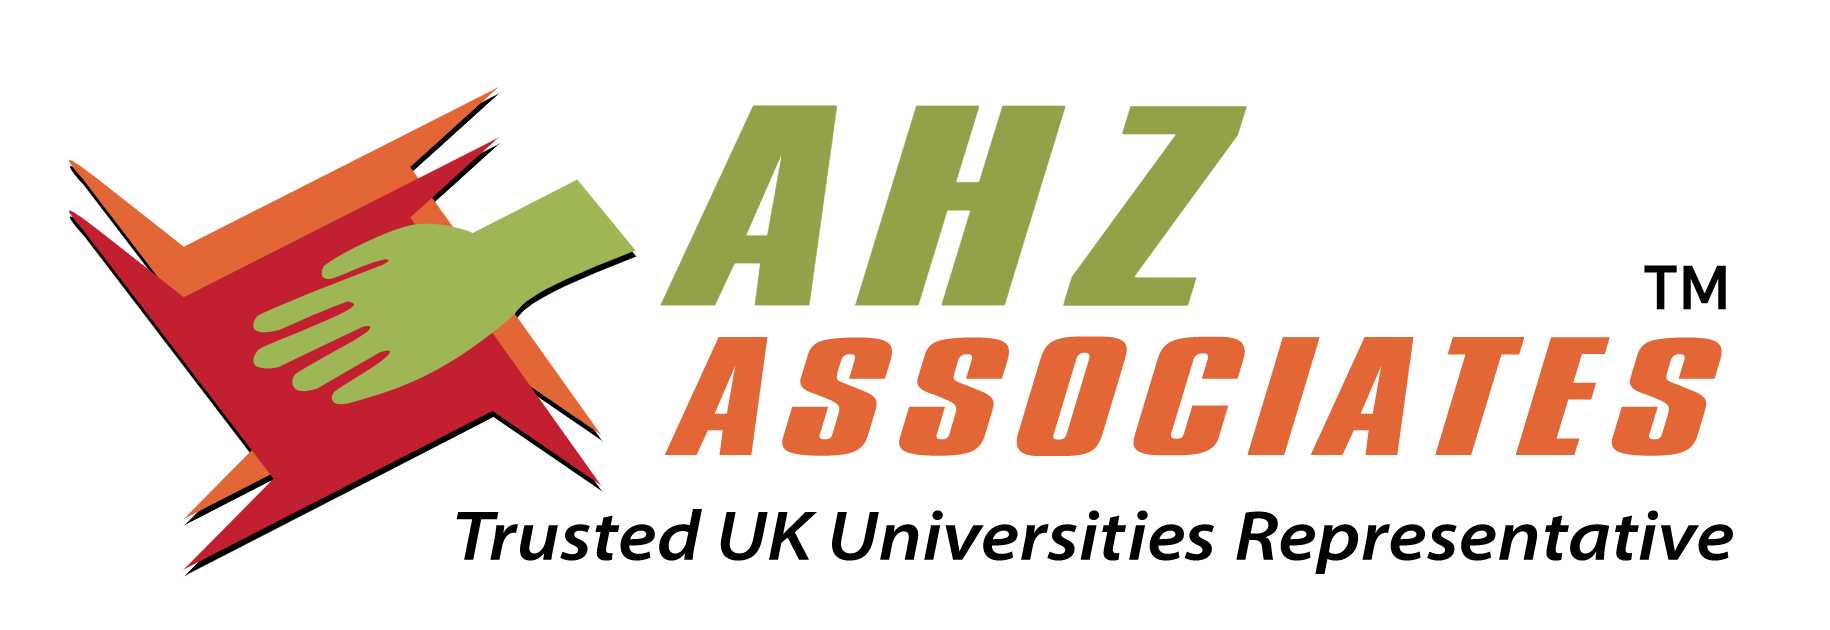 Ahz Associates